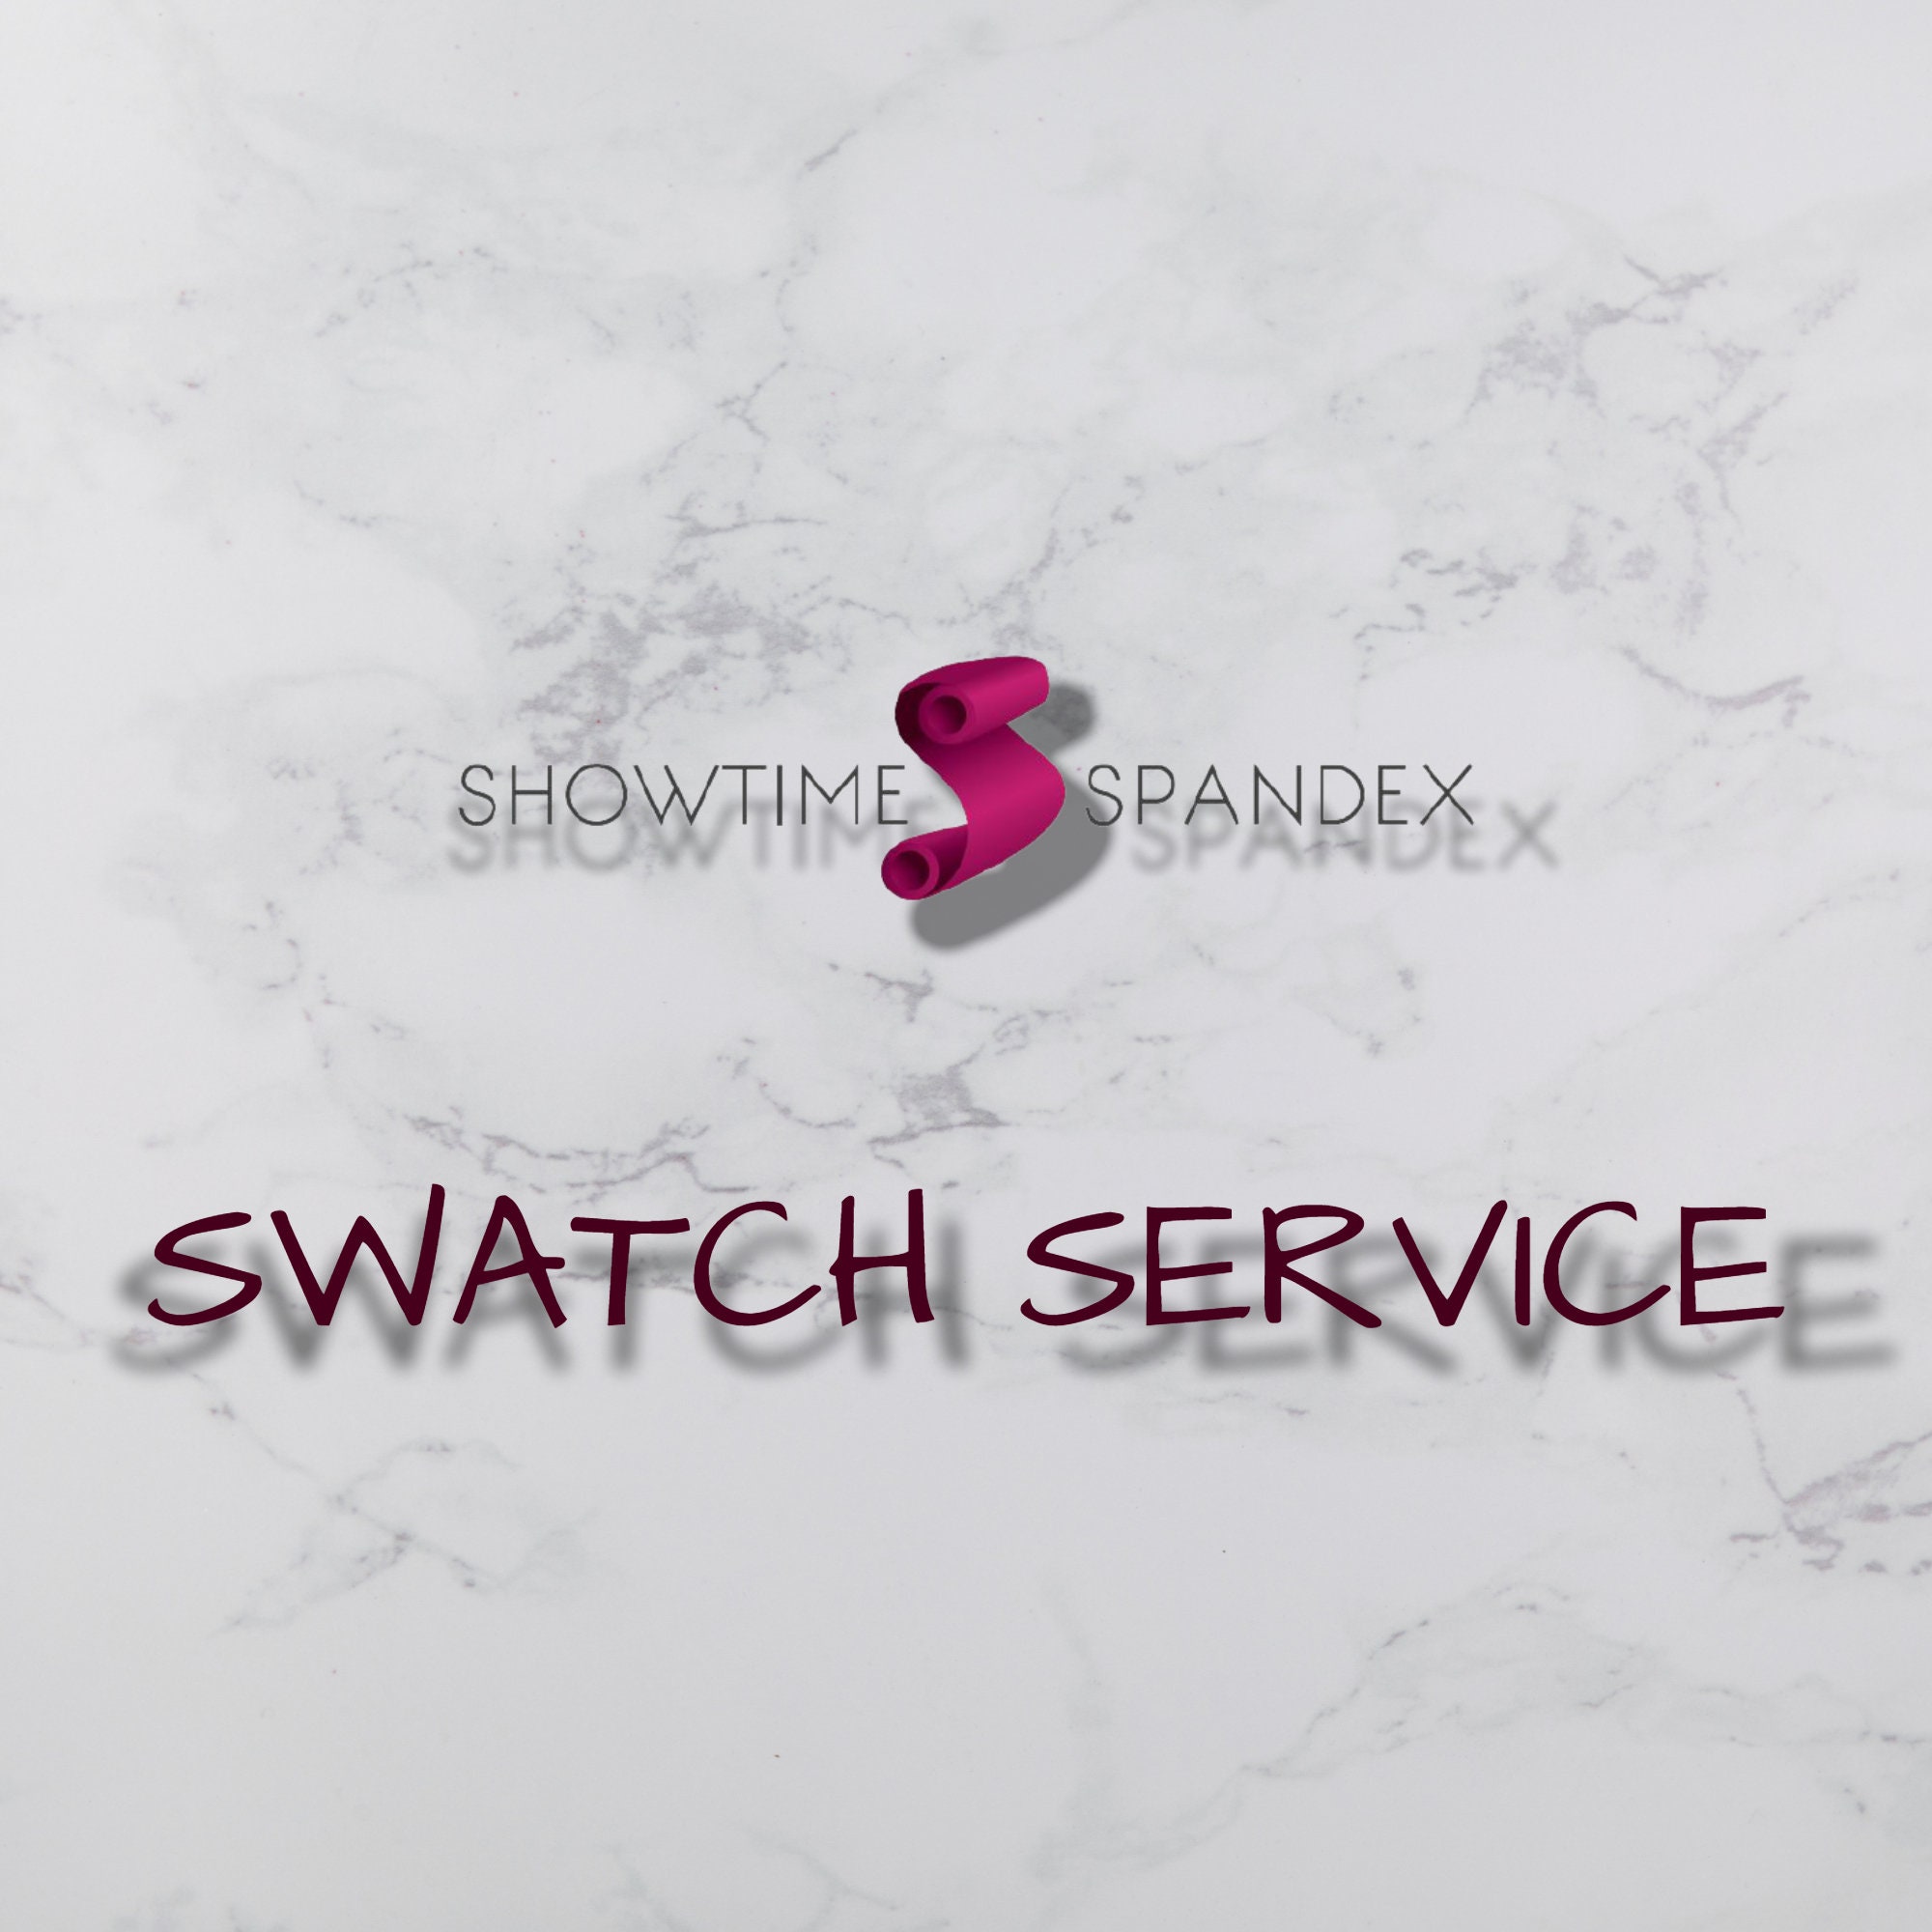 Showtime Spandex: North America's Premium Colorful Stretch